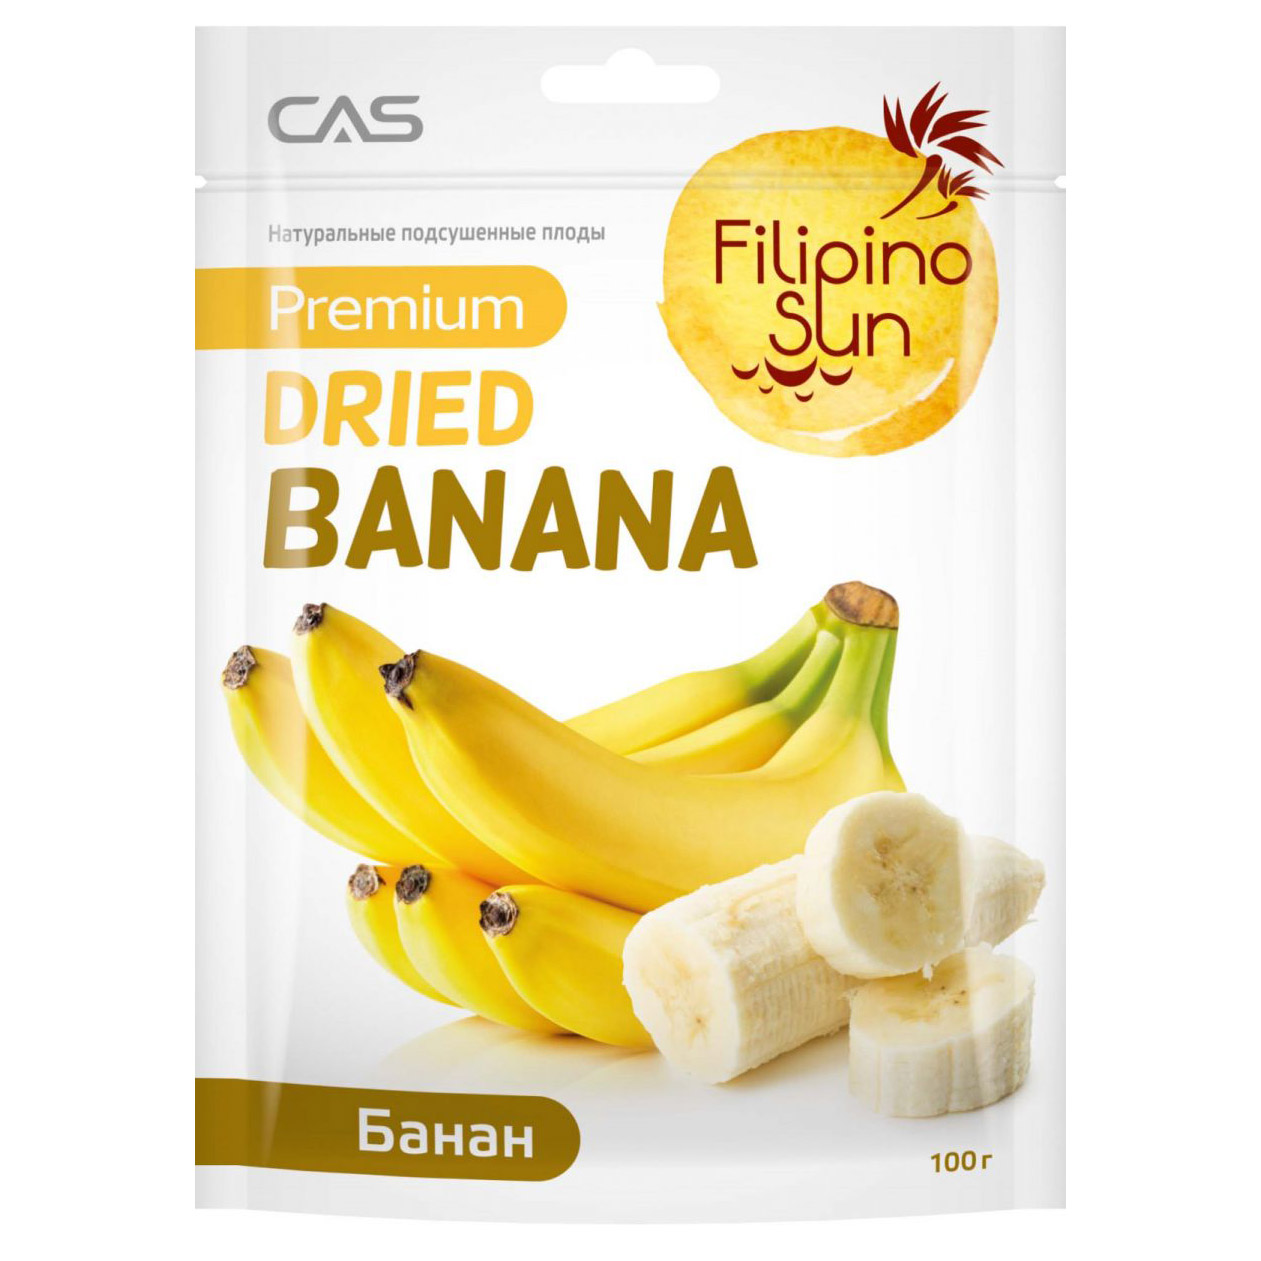 Подсушенные плоды банана Filipino Sun 100 г